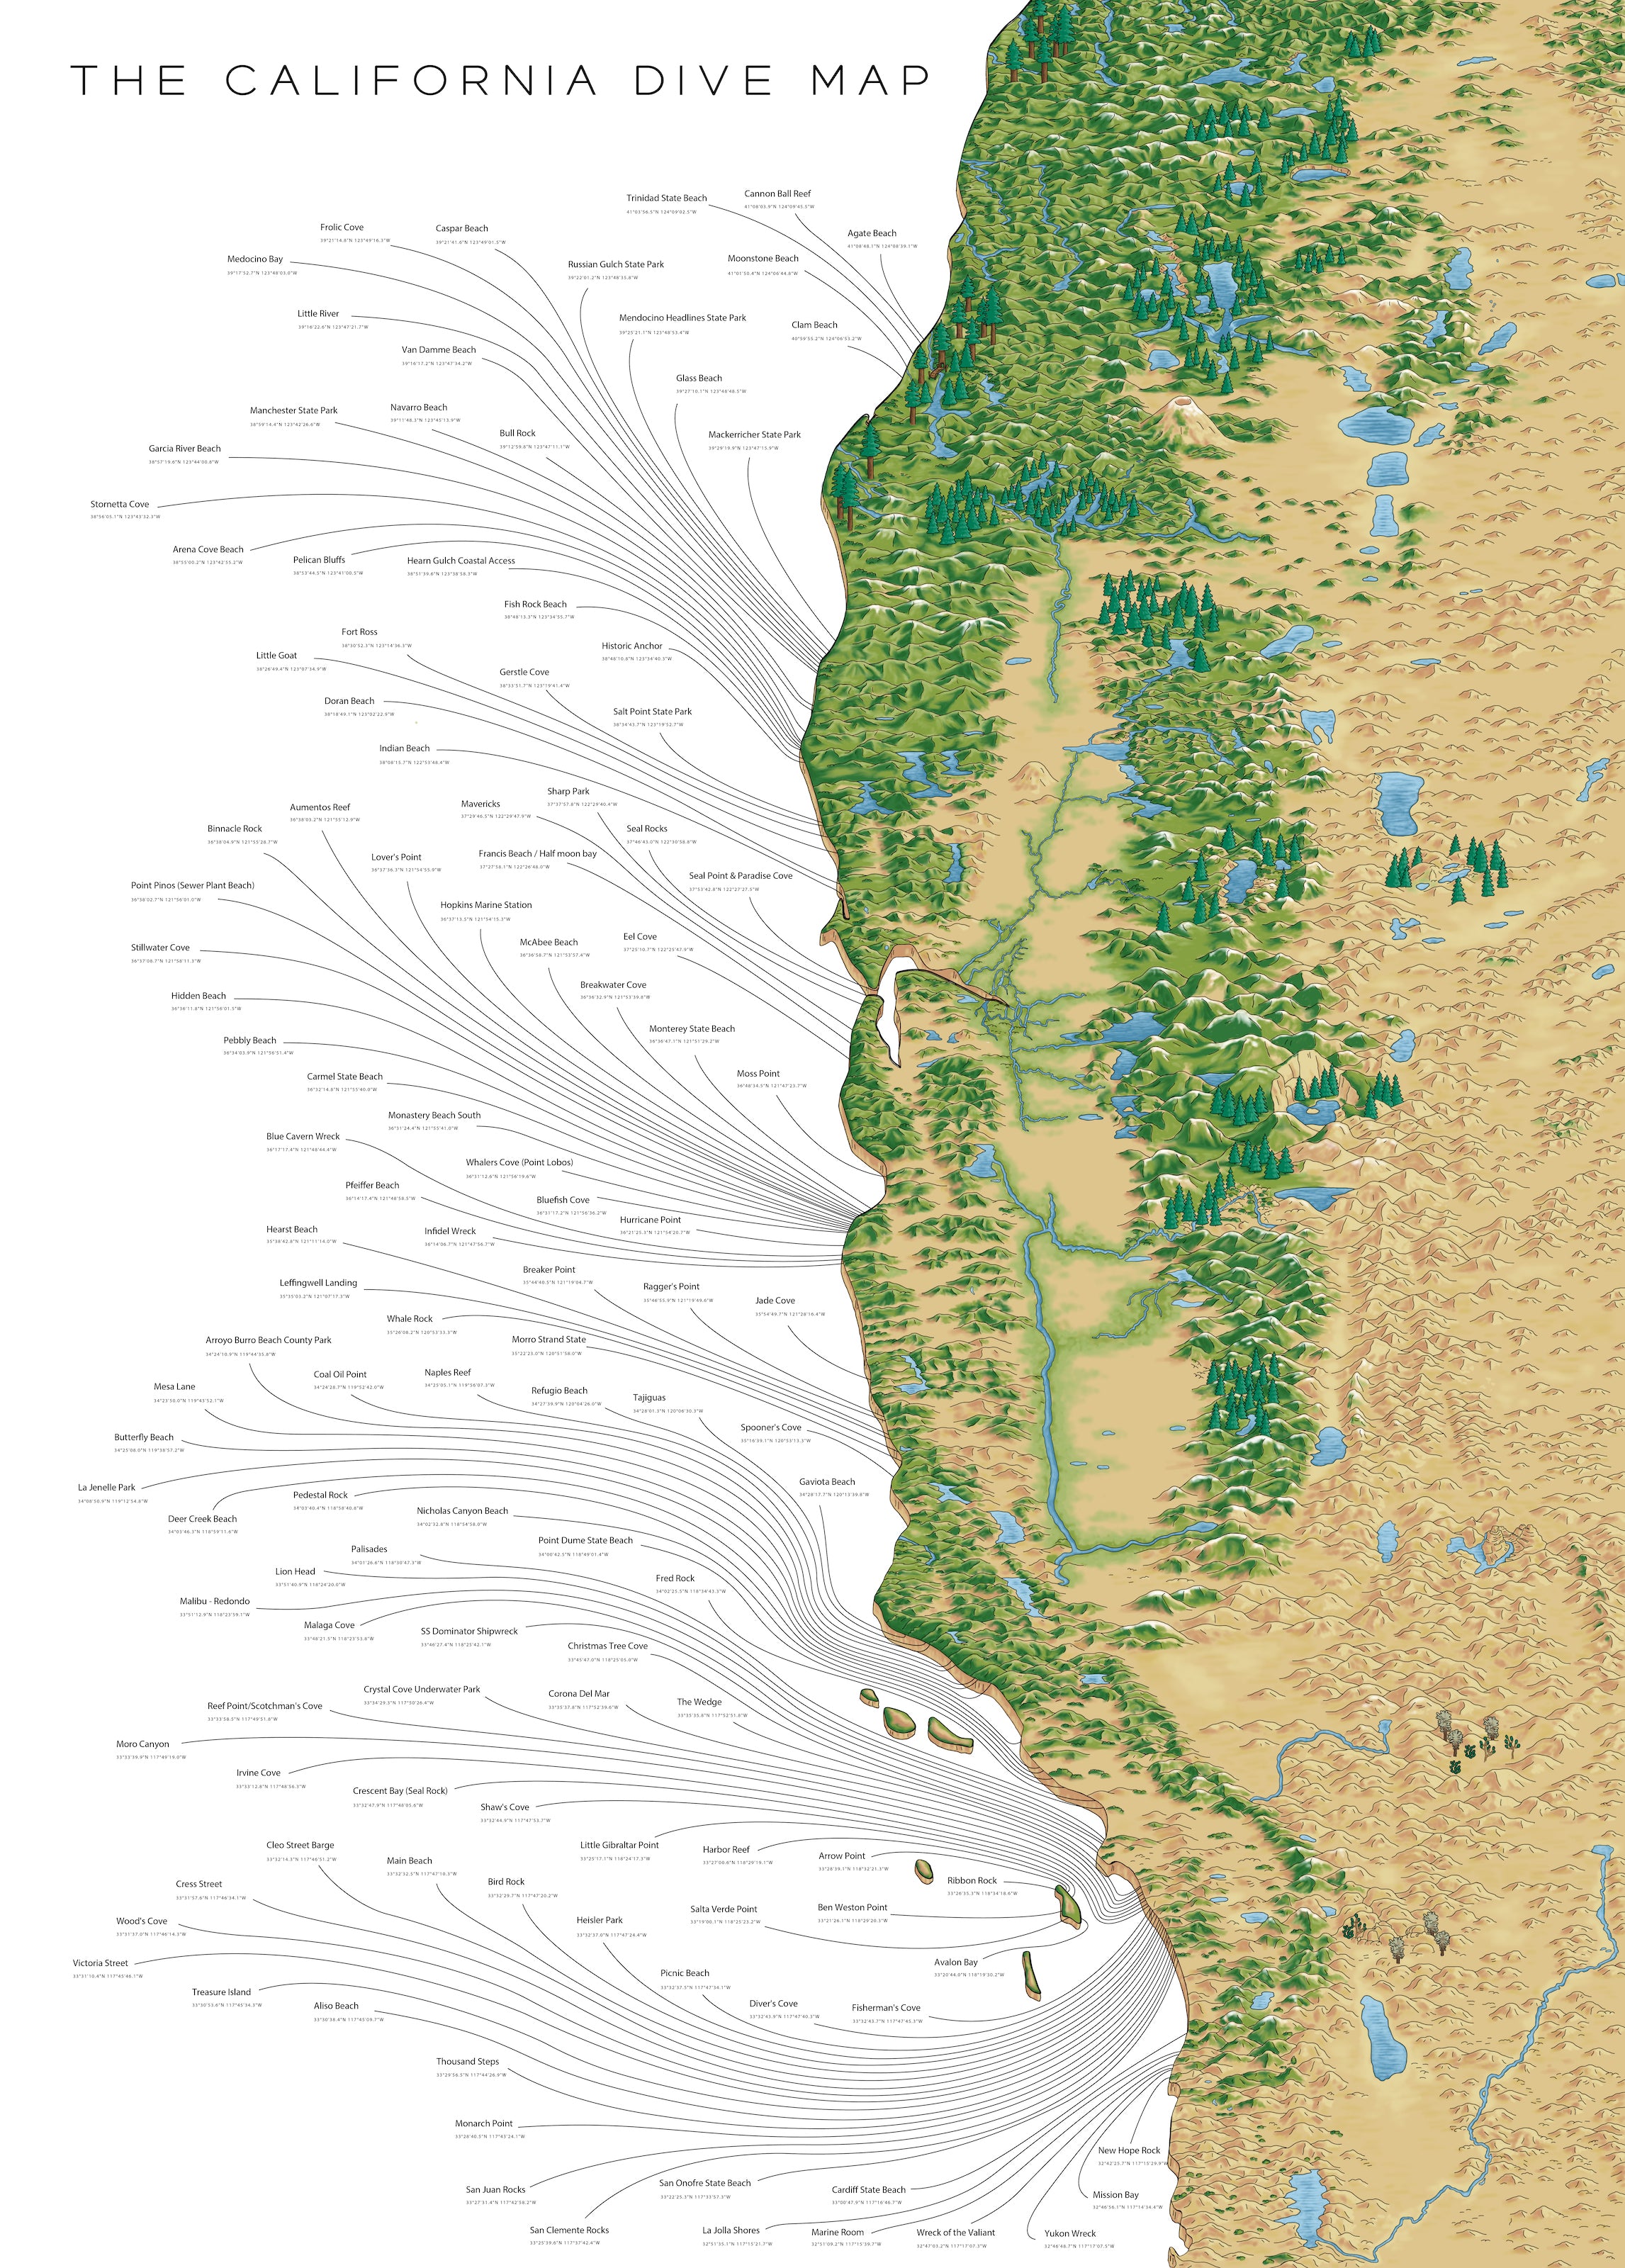 The California Dive Map